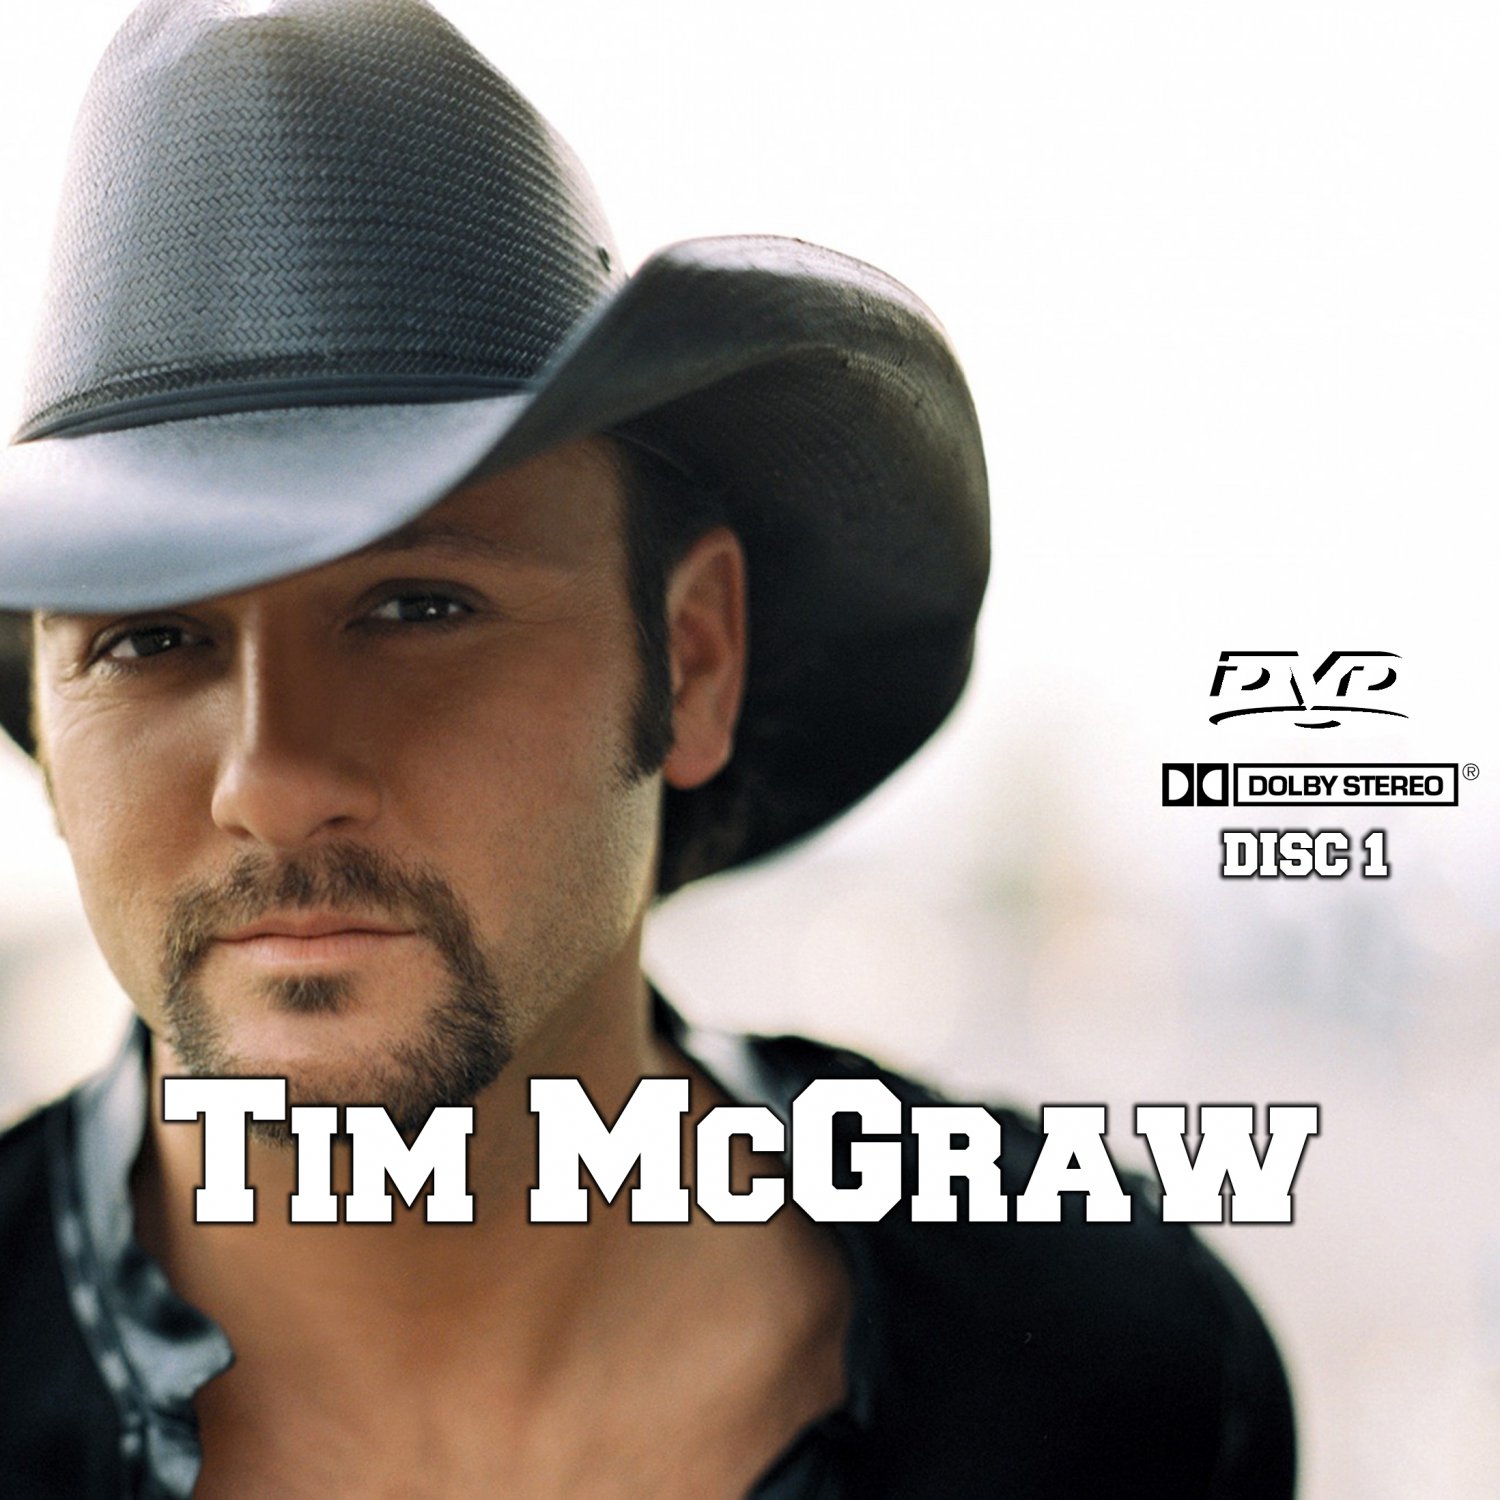 Tim Mcgraw Videos Collection (3 DVD's) 67 Music Videos